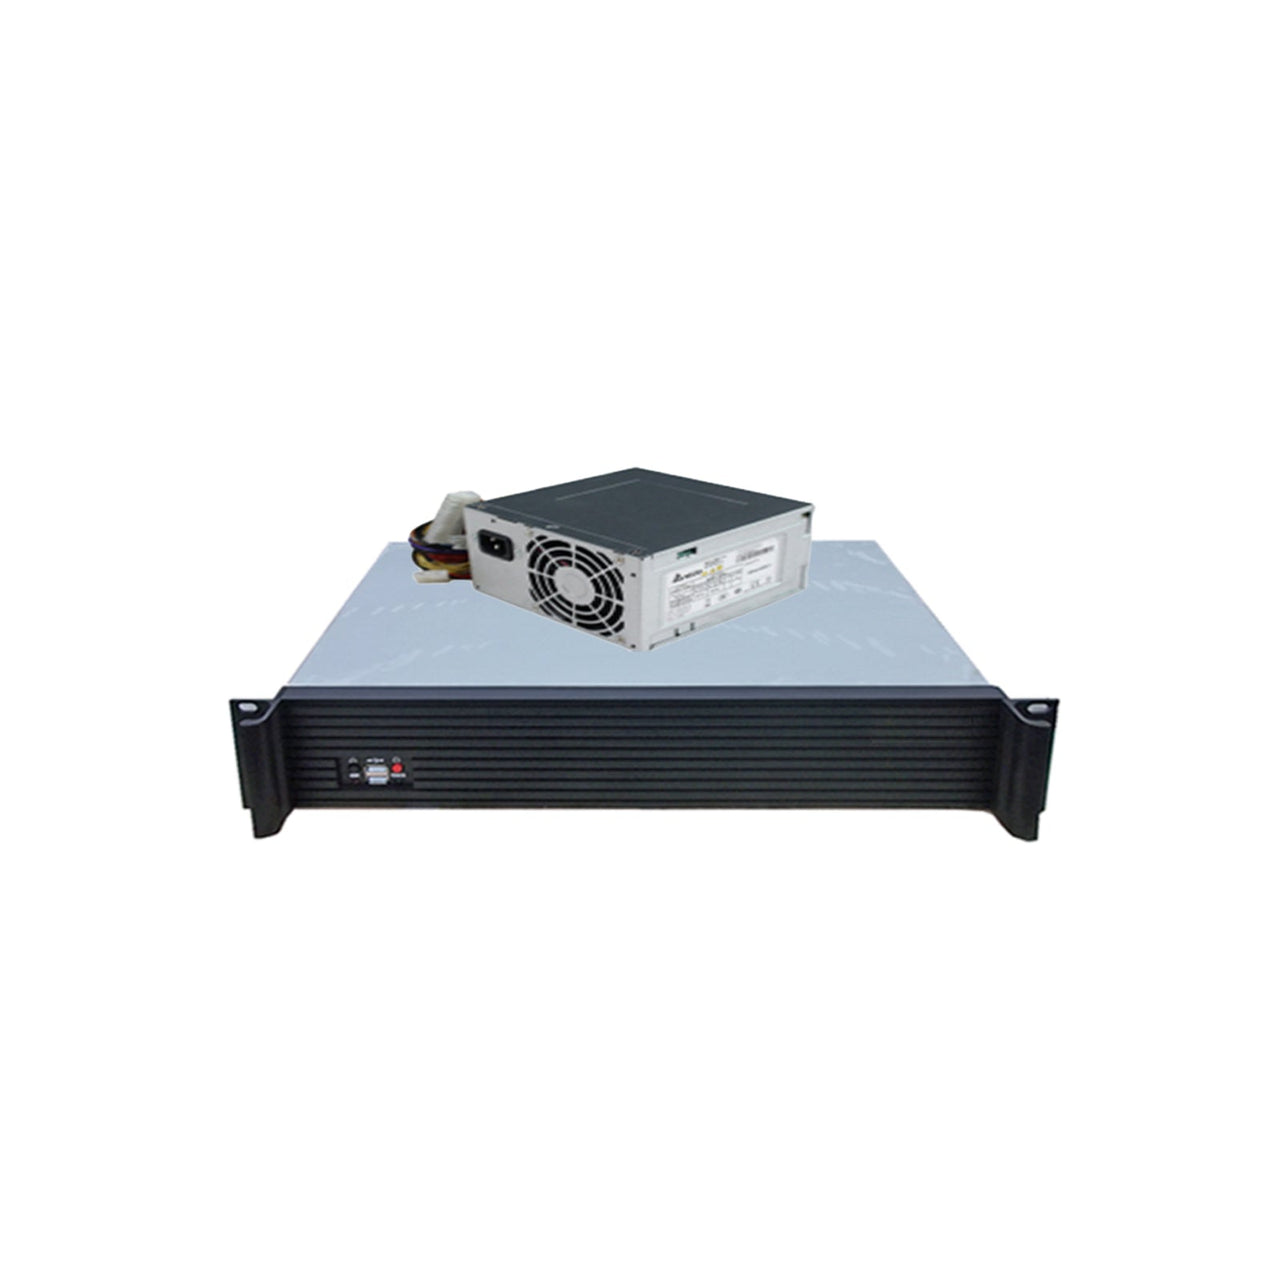 JideTech X86 Super NVR, Centralized Storage Management Device Support 128pcs Cameras Input(NVSS8704-100)